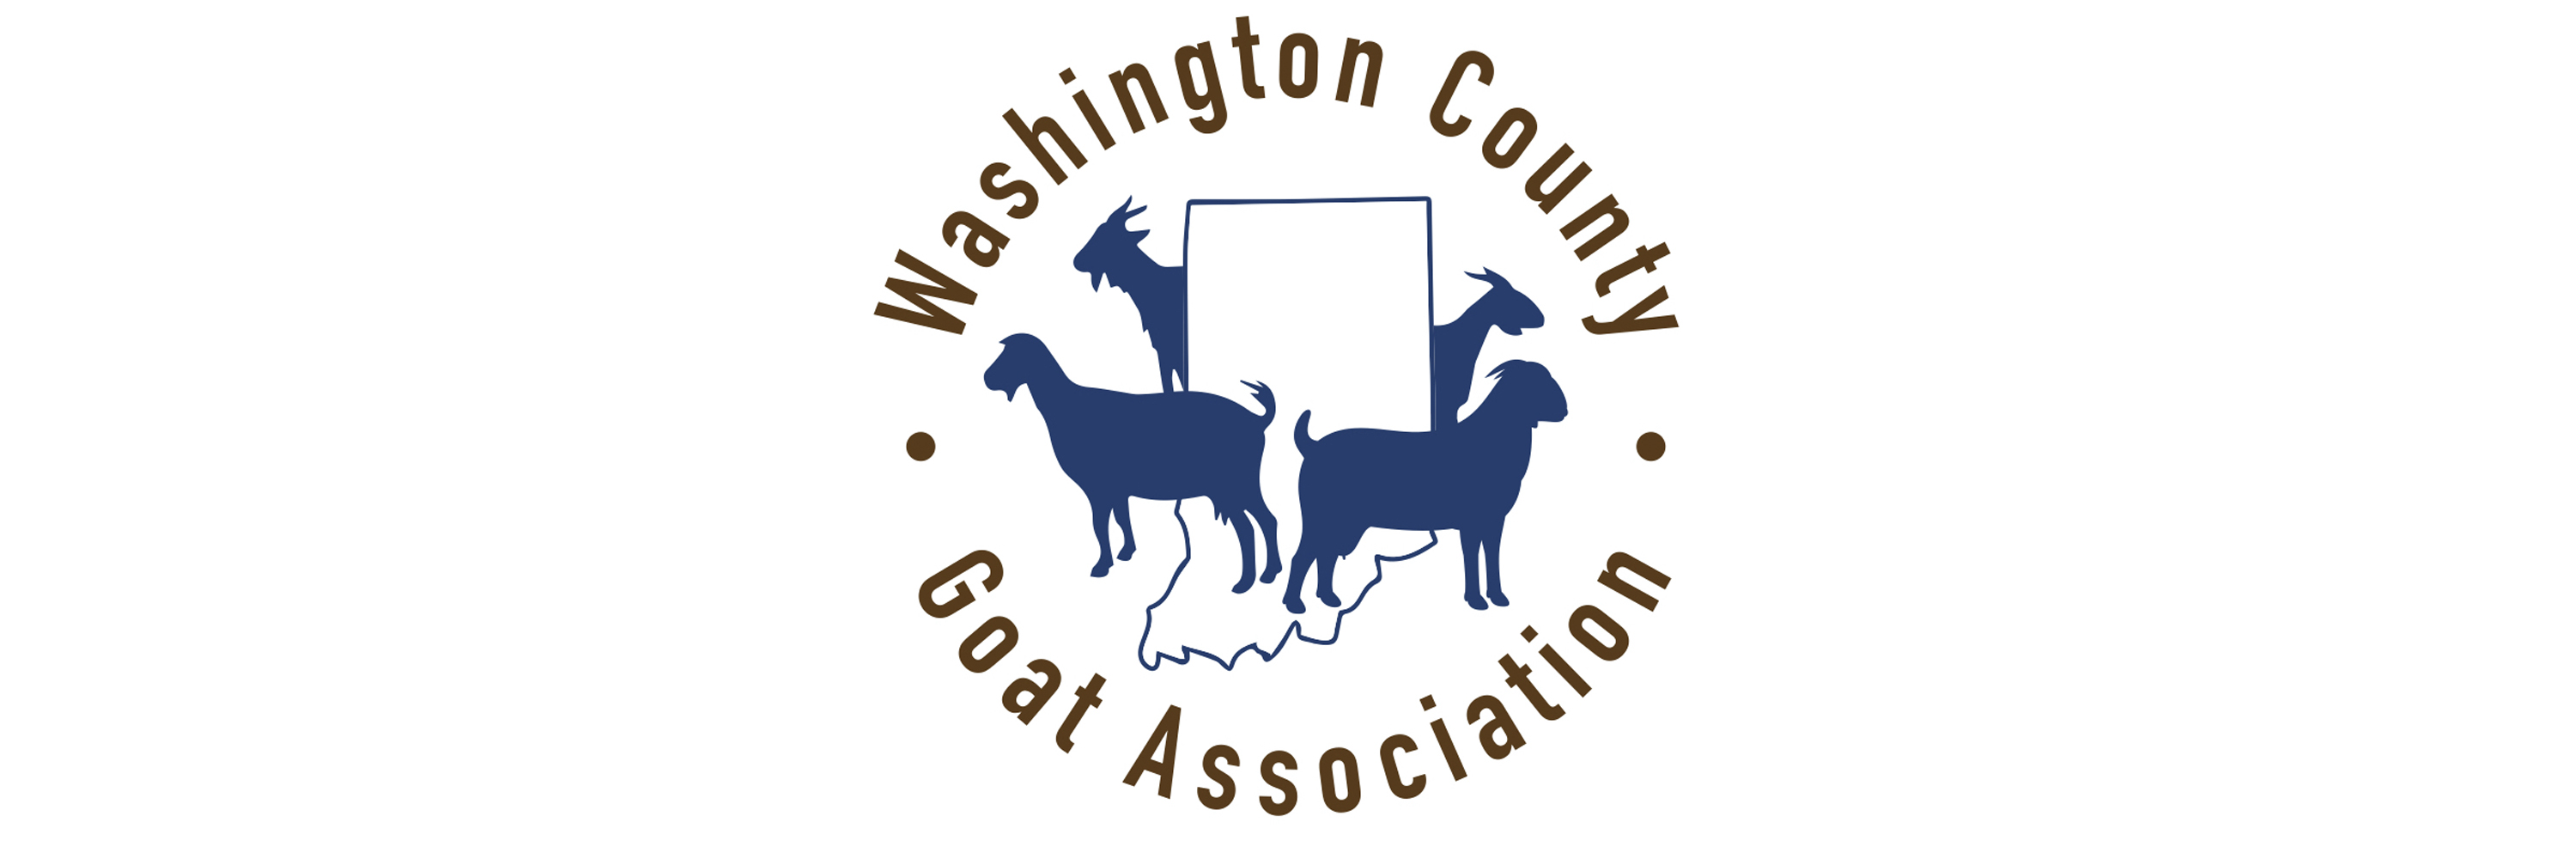 goat association